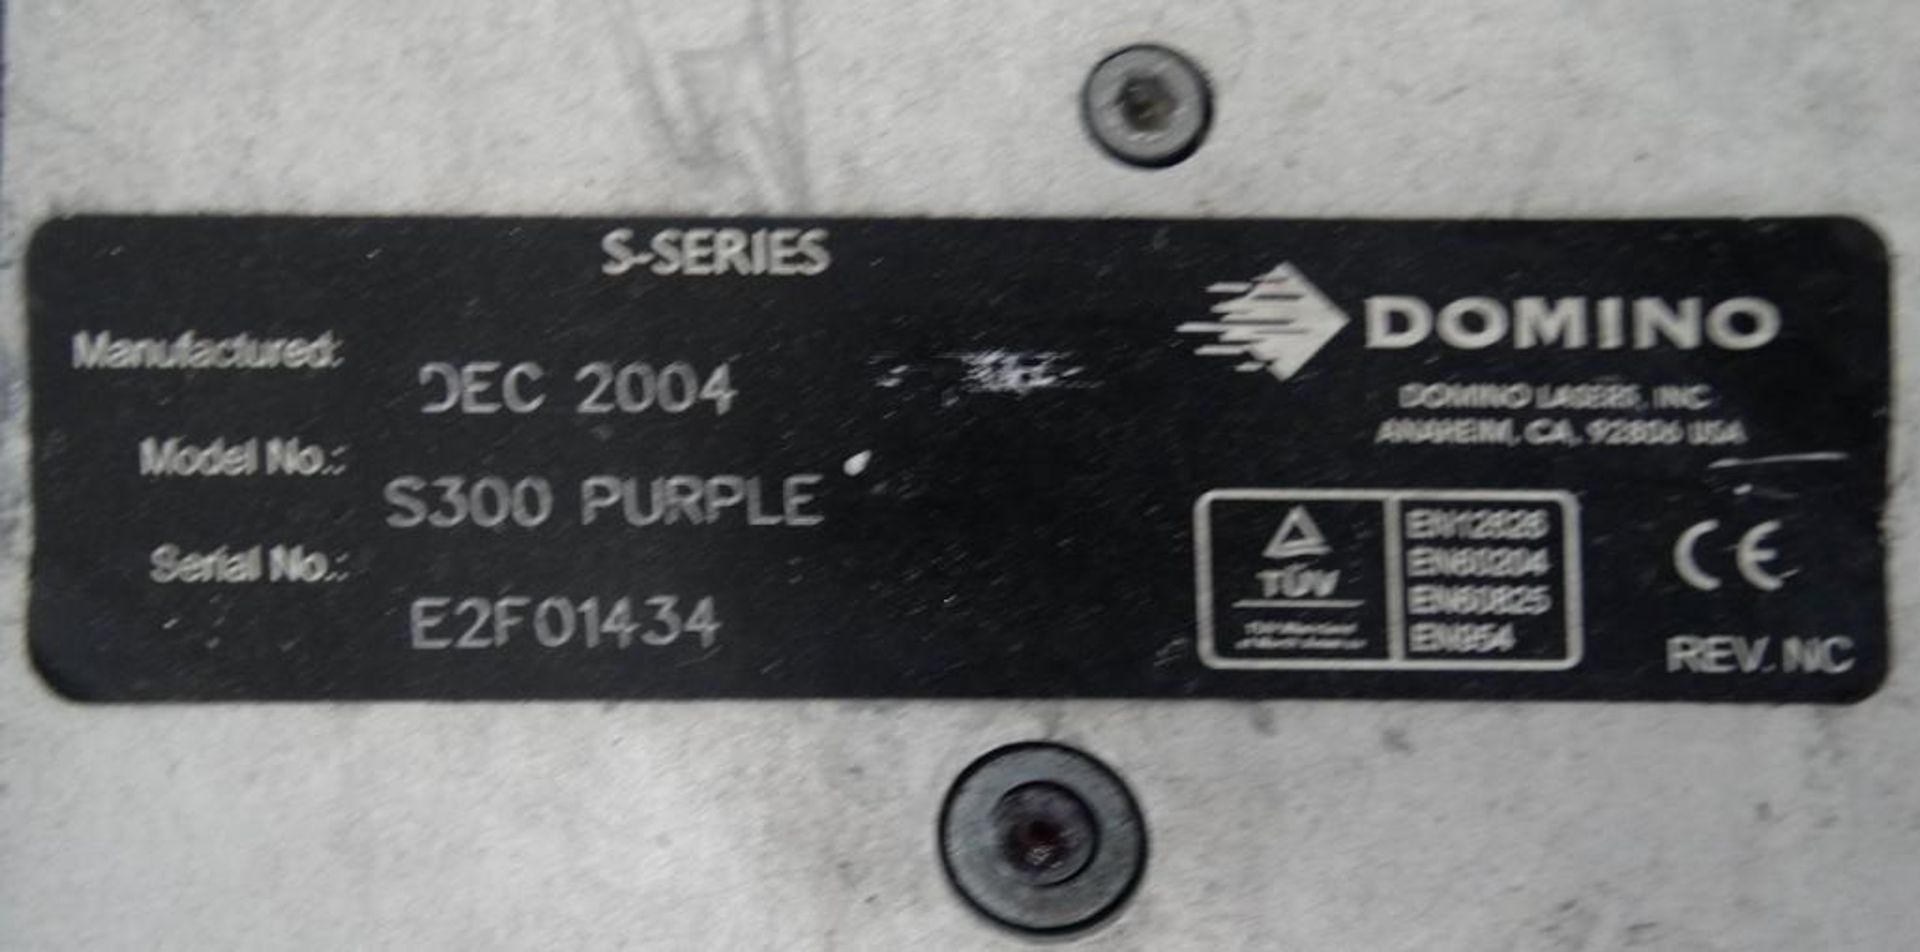 Domino S300 Series Laser Coder - Image 7 of 7